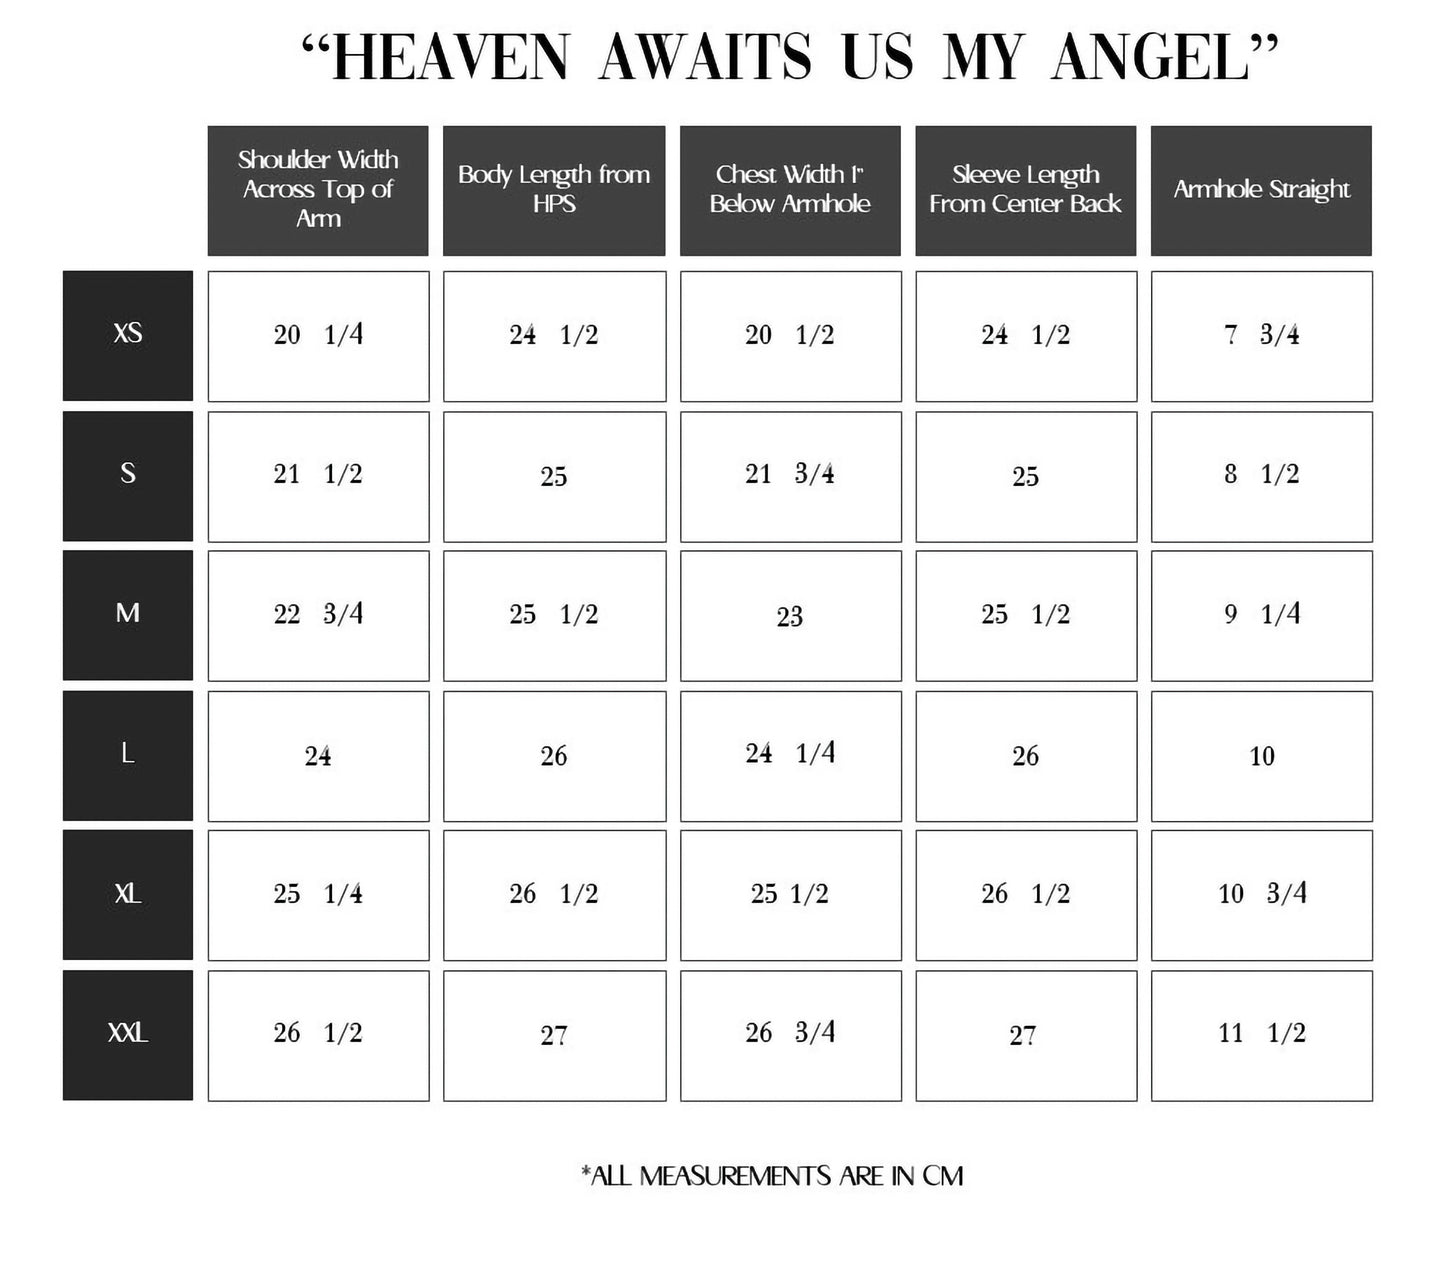 "HEAVEN AWAITS US MY ANGEL"